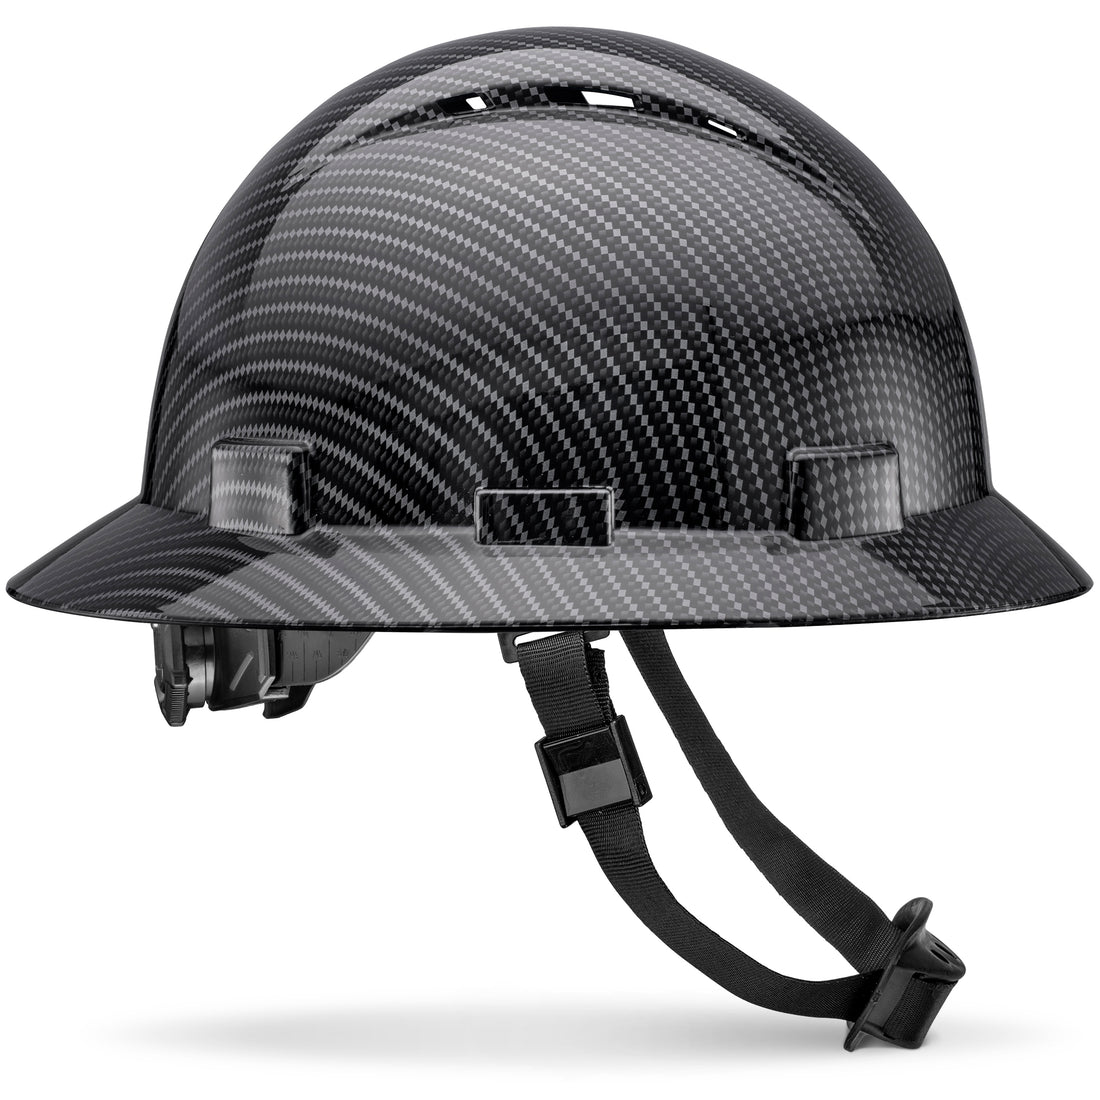 Full Brim Classic Black Carbon Fiber Carbon Fiber Design Gloss Finish Vented Hard Hat